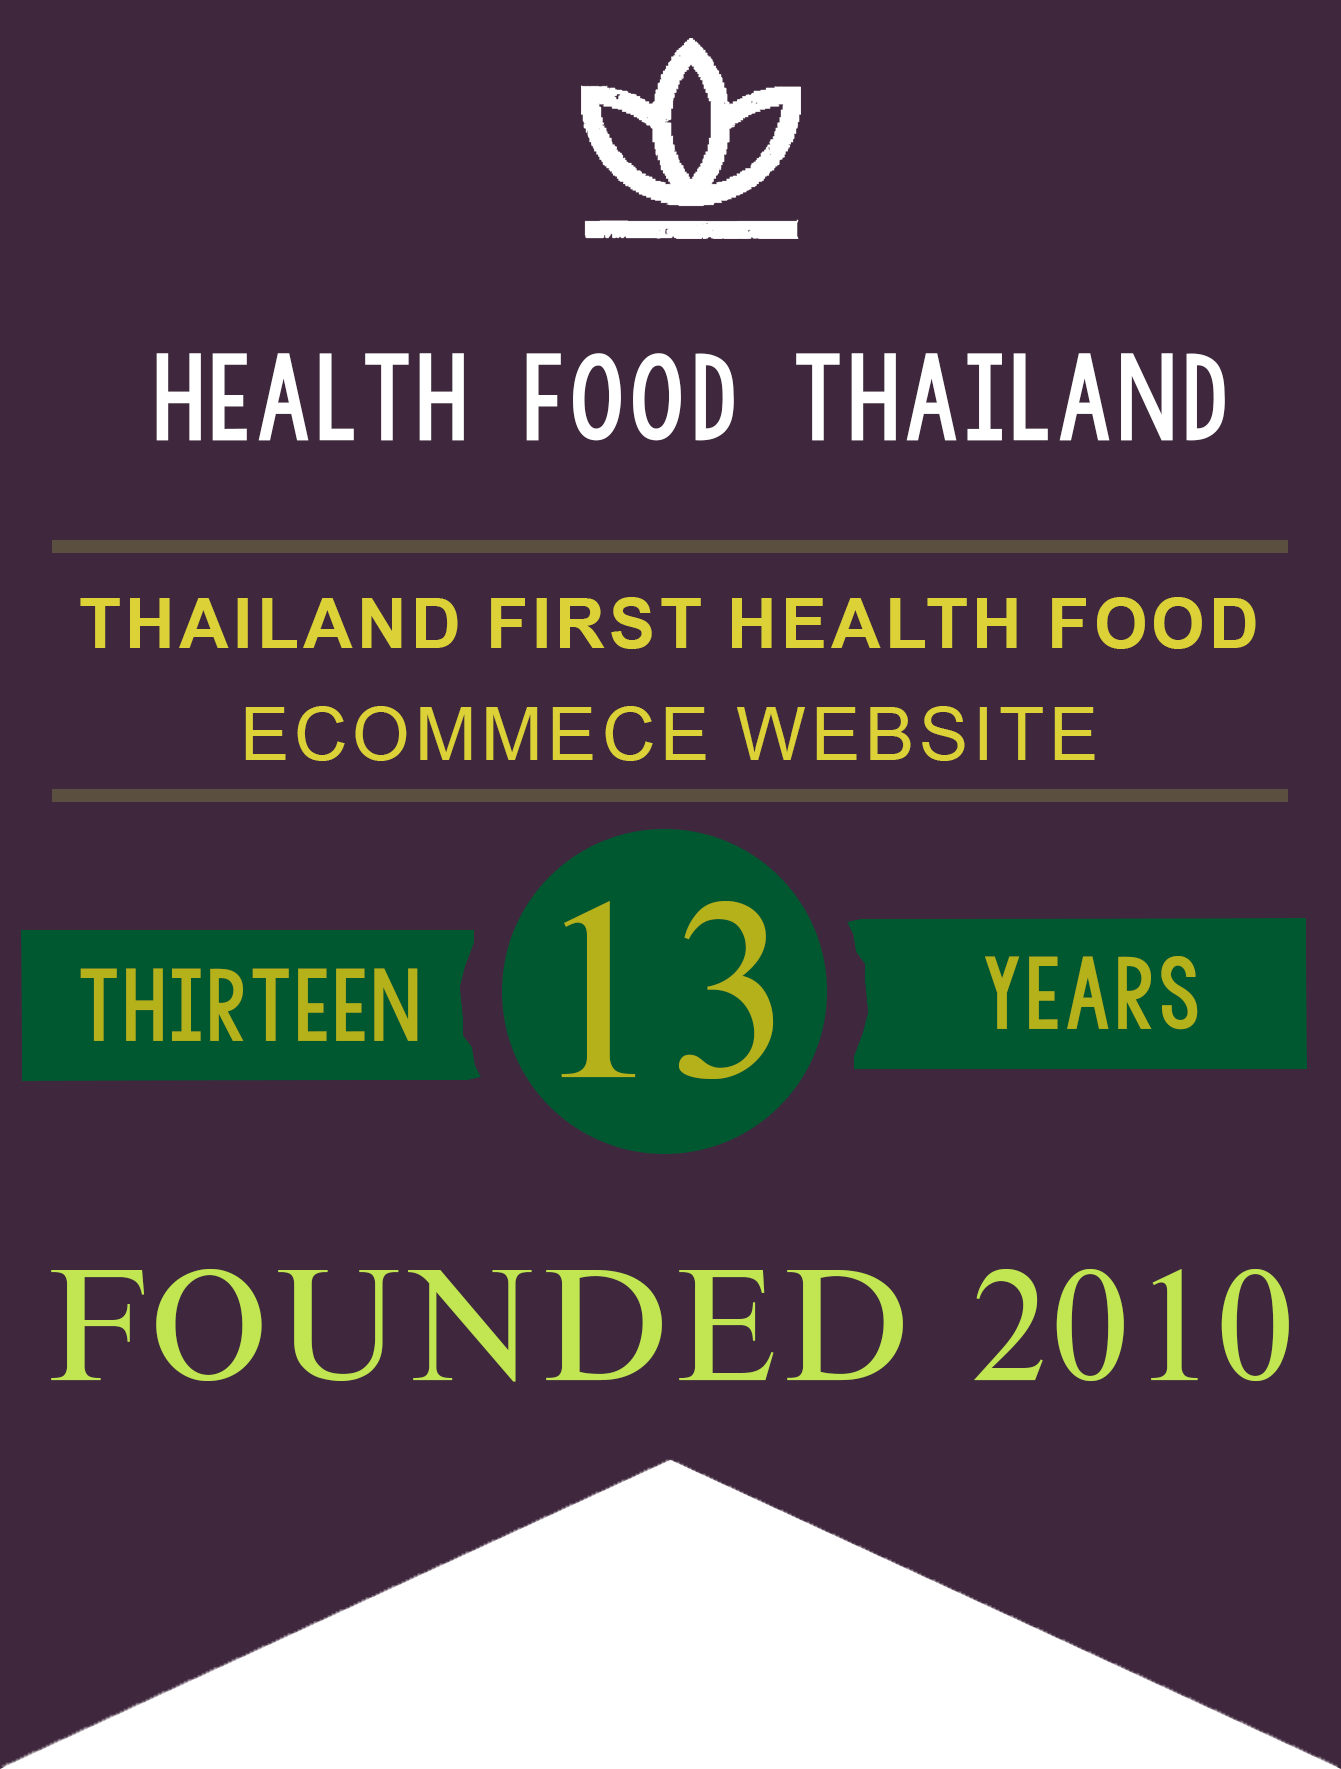 Health Food Thailand Founded 2010